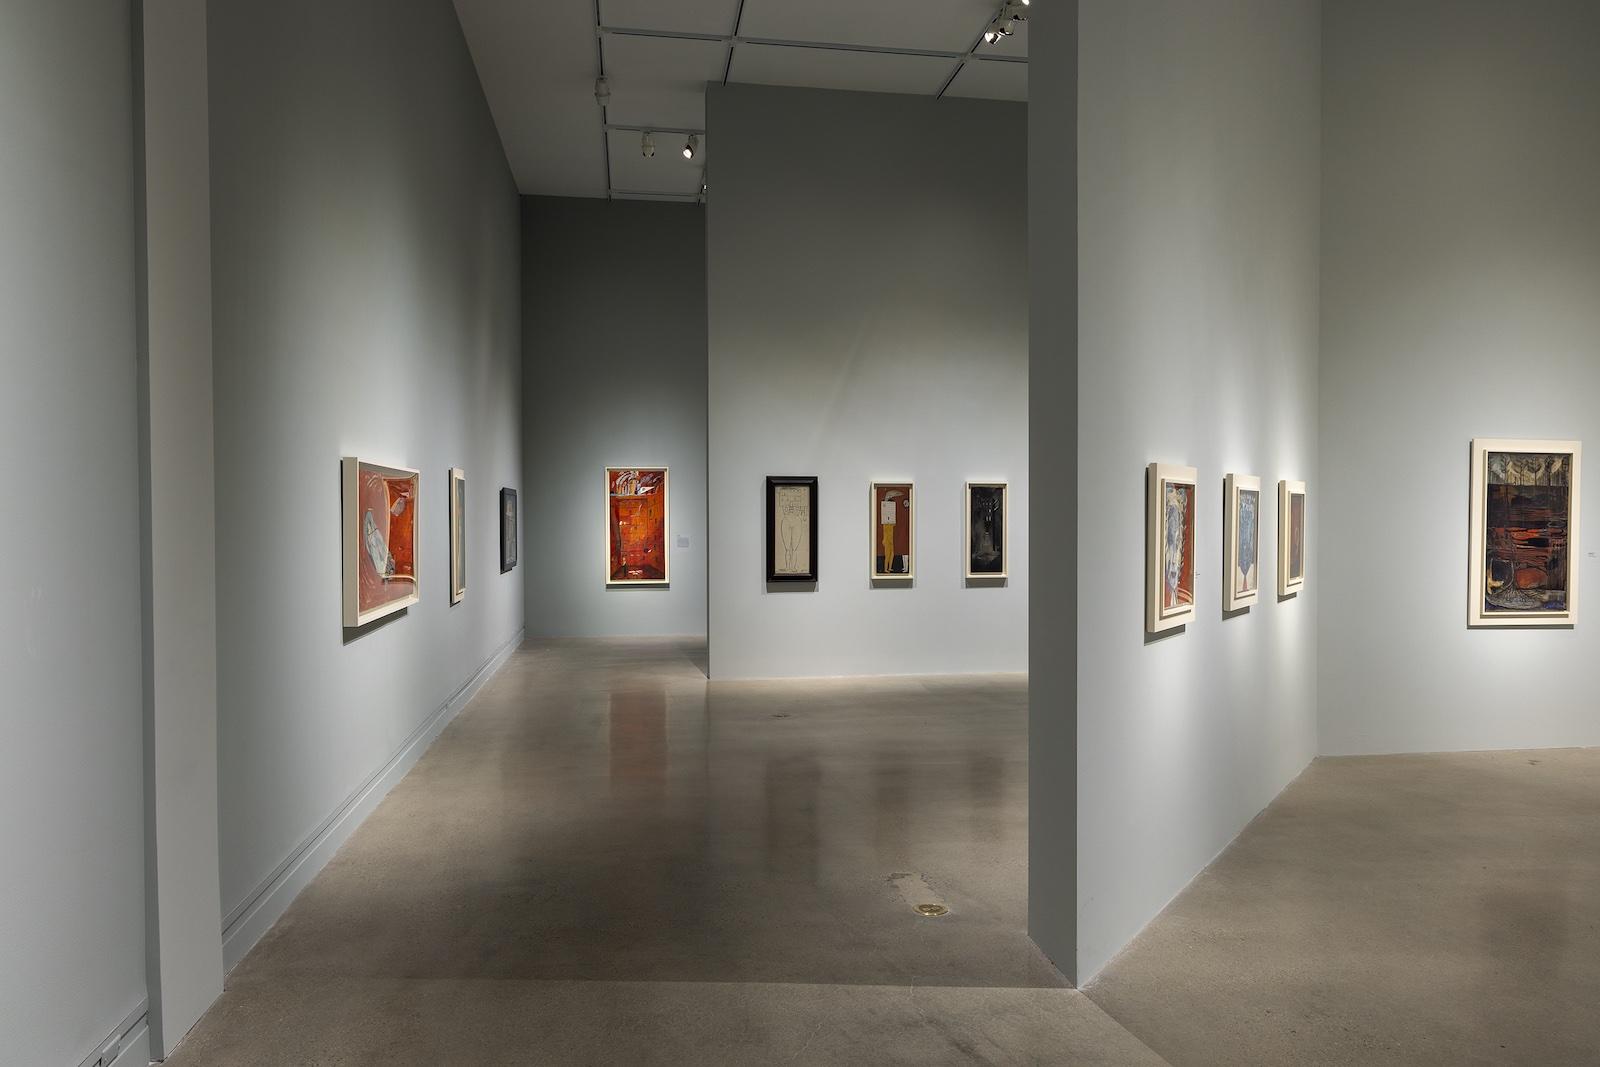 Louise Bourgeois' Early Paintings: 'Paintings' at New York's MET